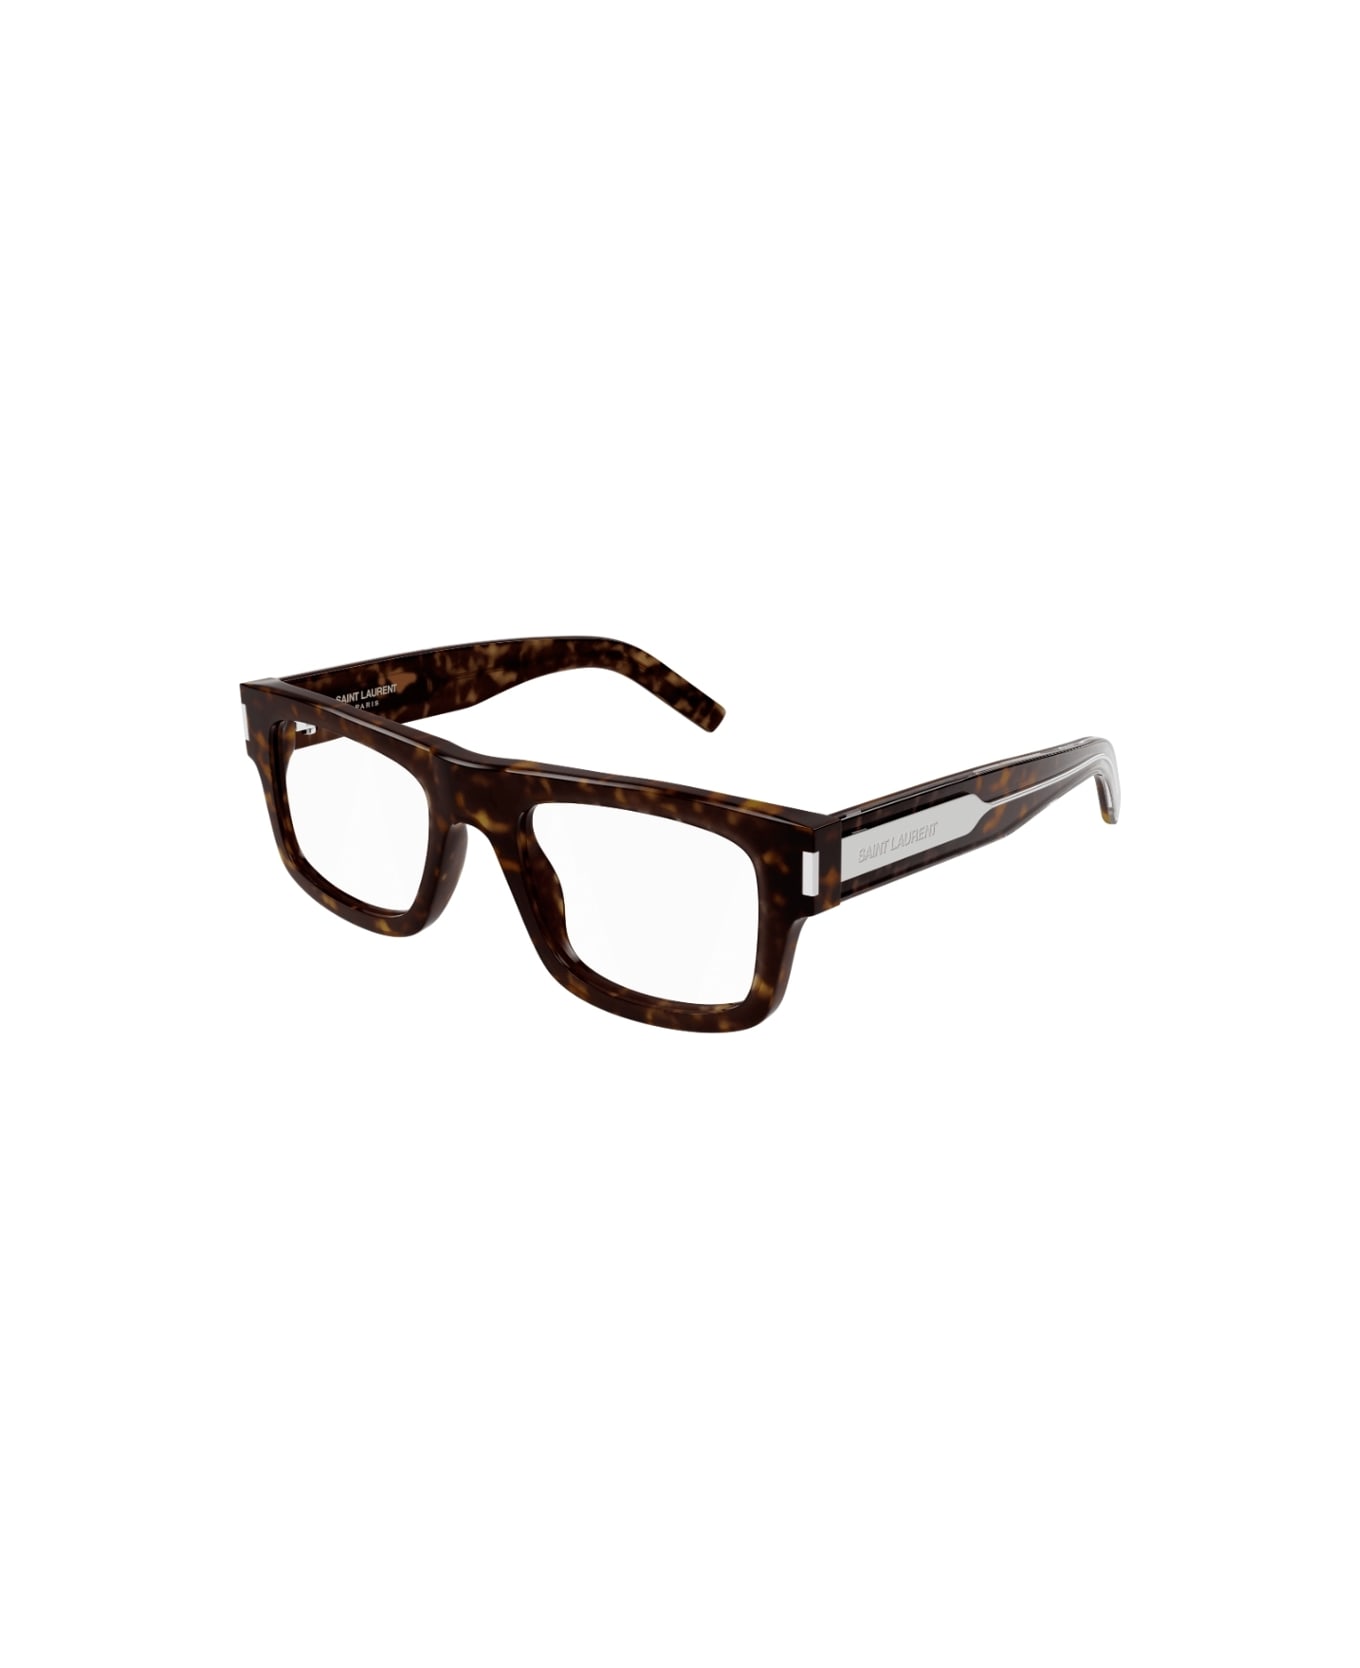 Saint Laurent Eyewear sl 574 002 Glasses